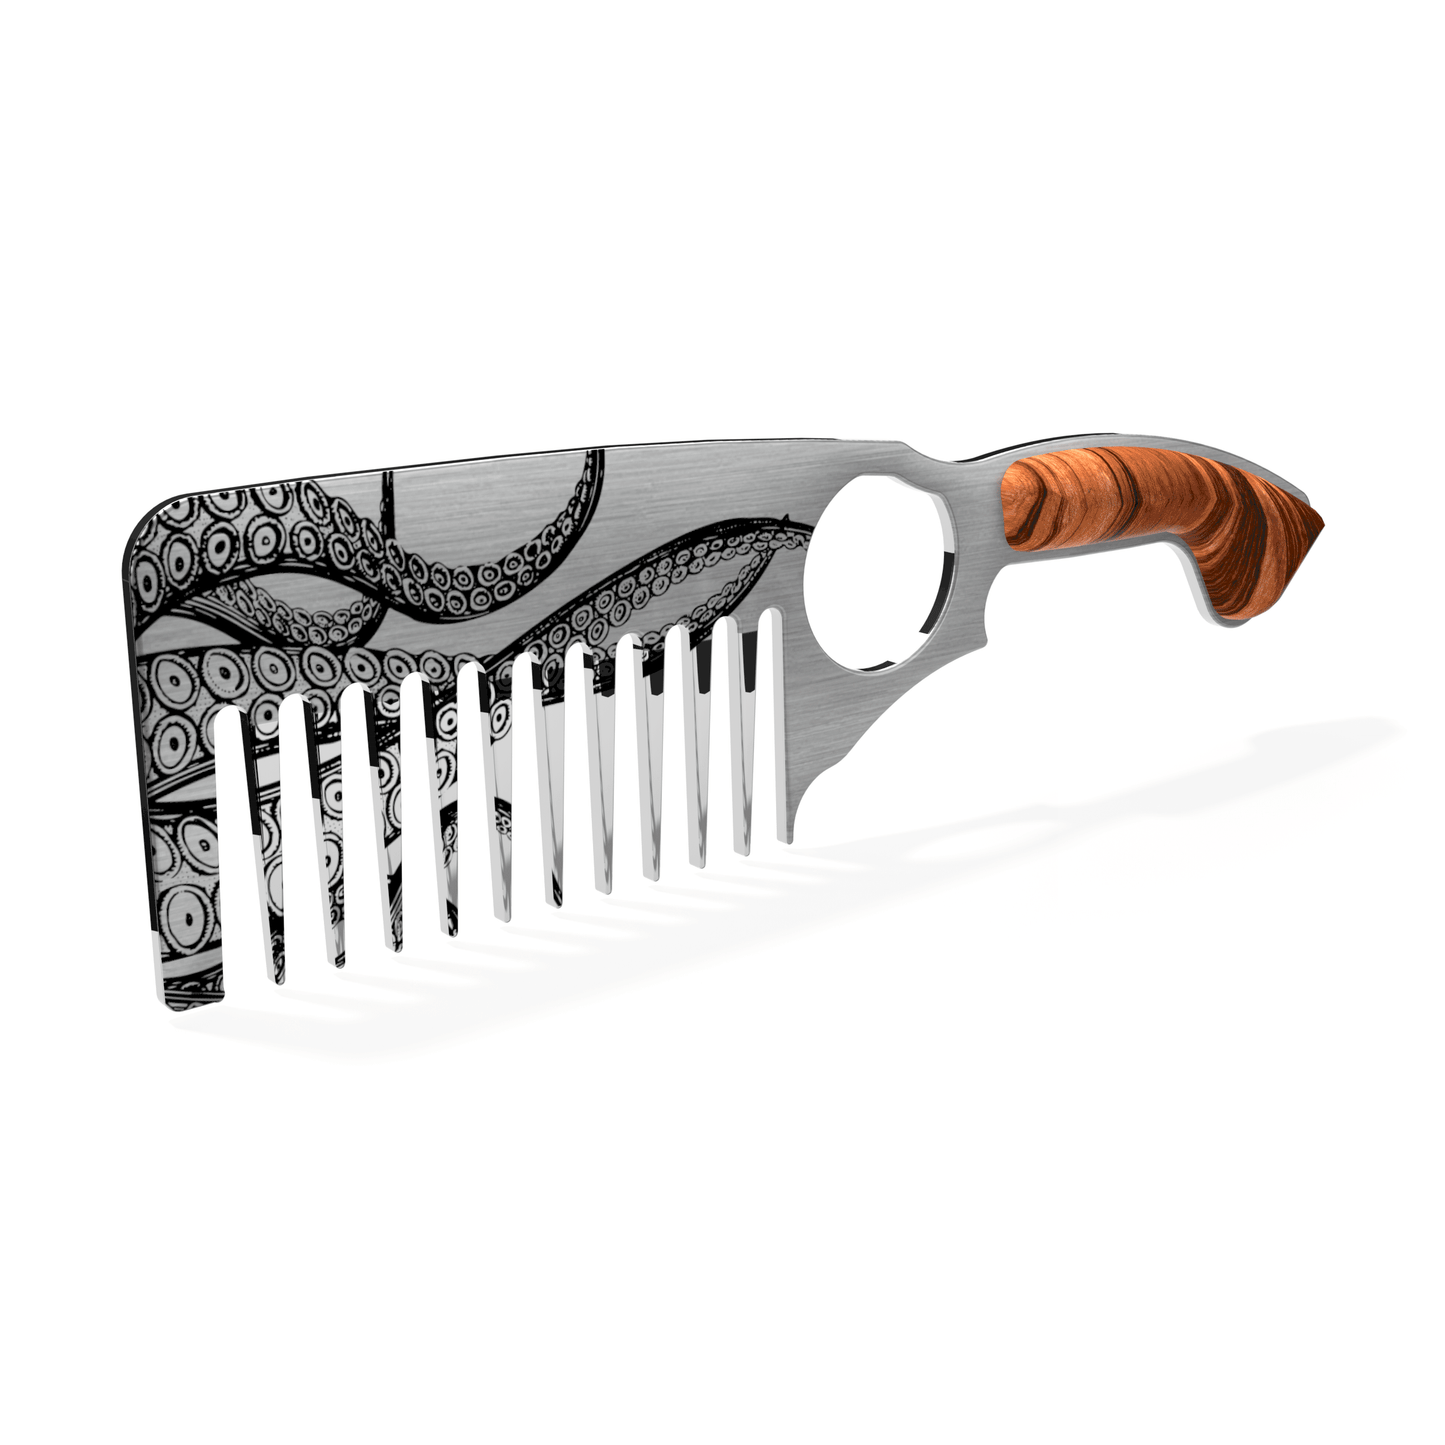 Bench Made American Stainless Kraken Beard Comb